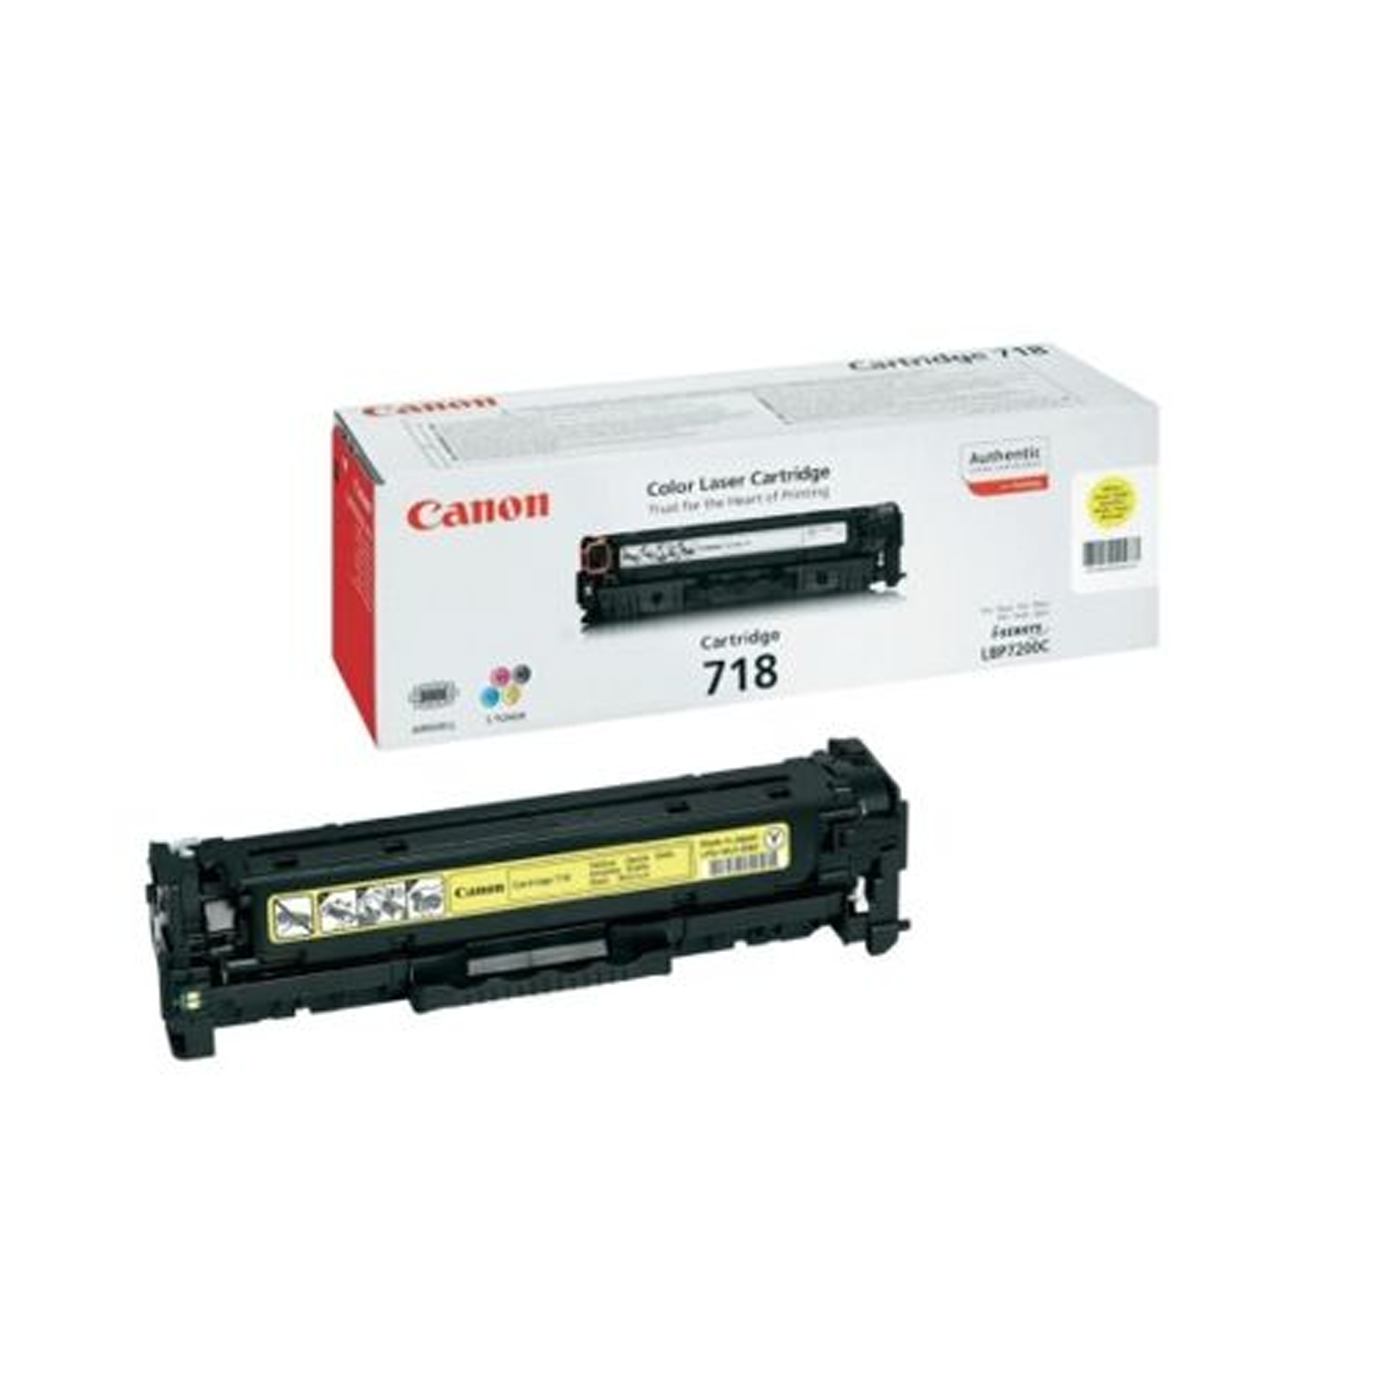 Canon Crg 418 Toner Cartridge (Page Yield 1400) 